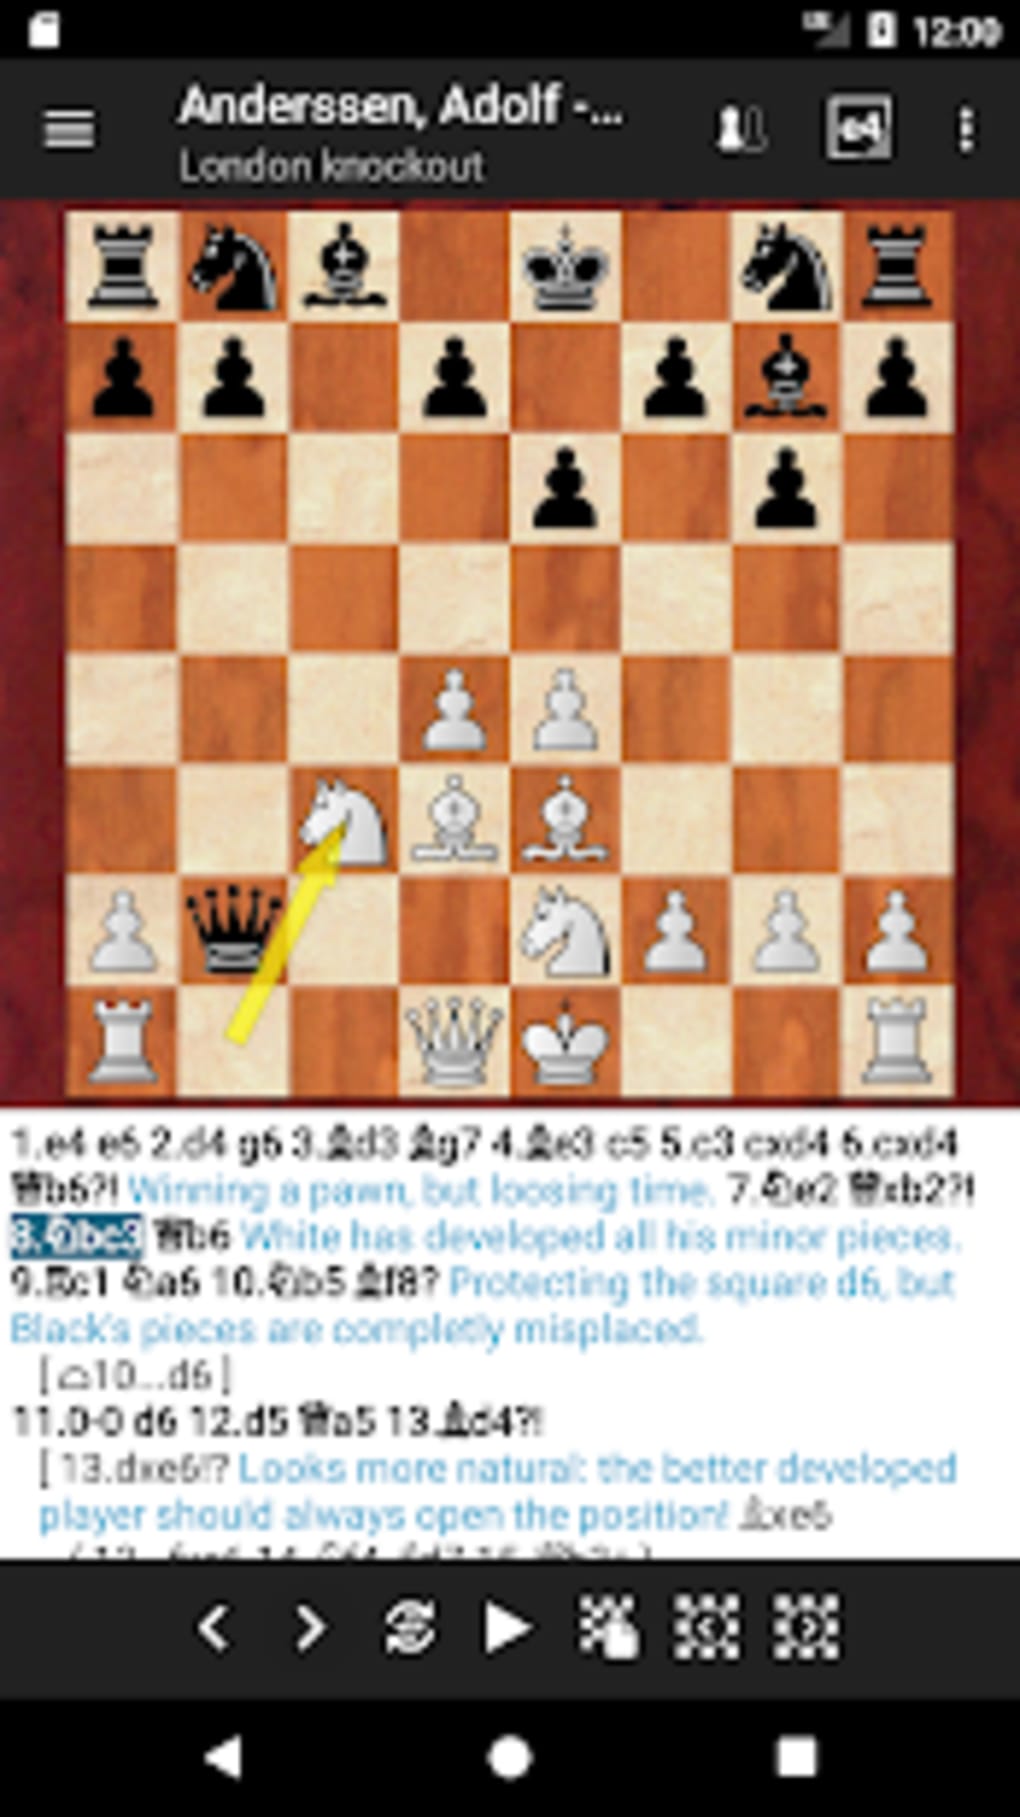 fritz chess 13 torrent